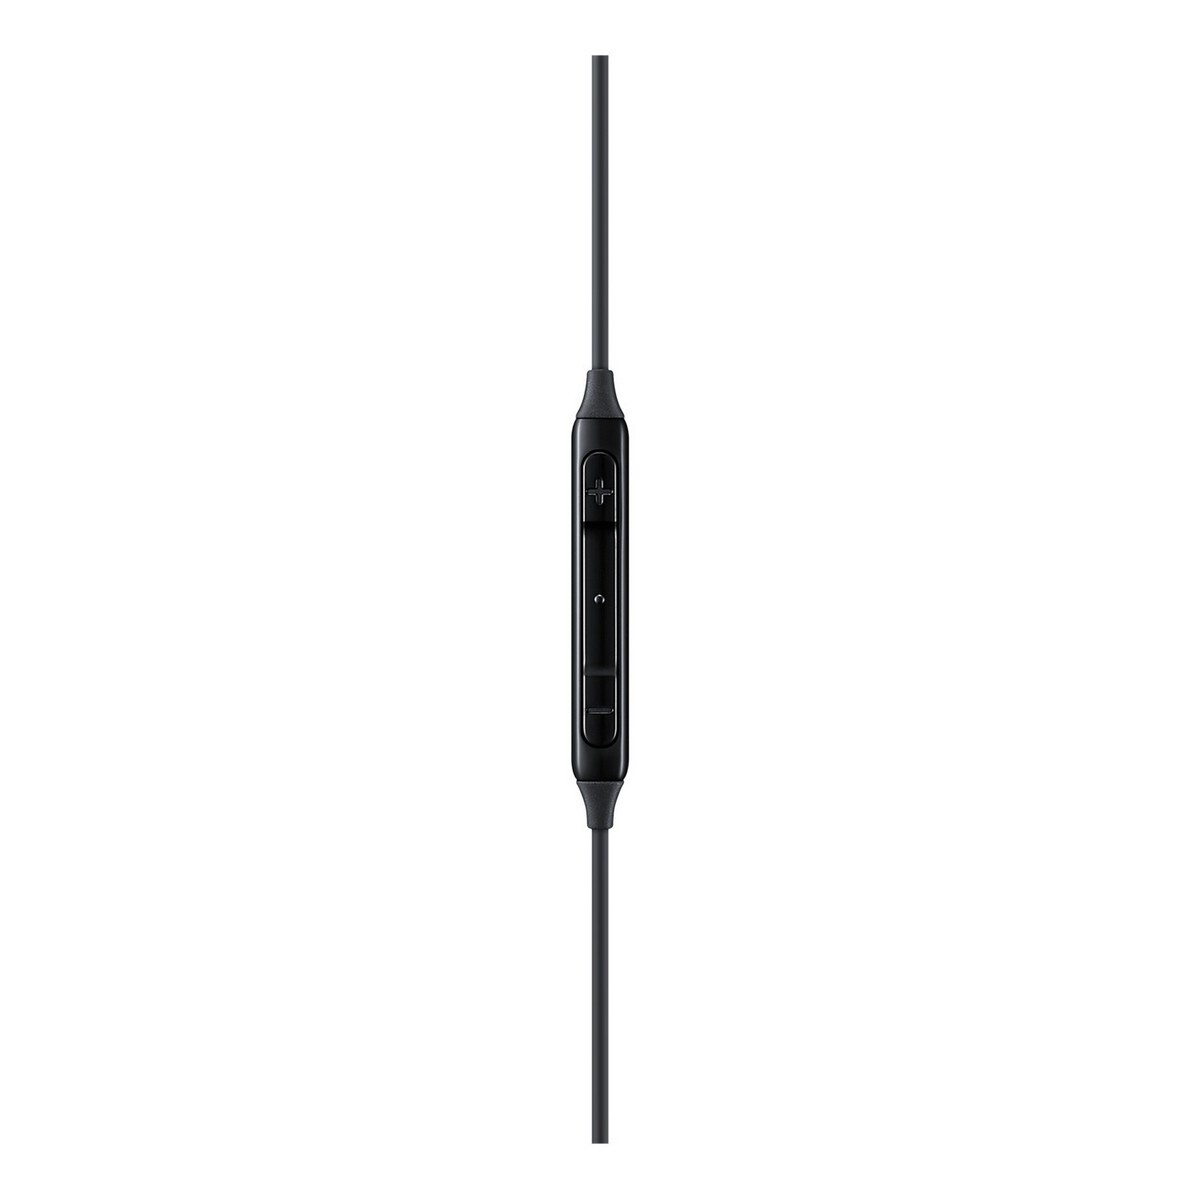 Samsung HeadSet Type-C Earphone EOIC100 Black